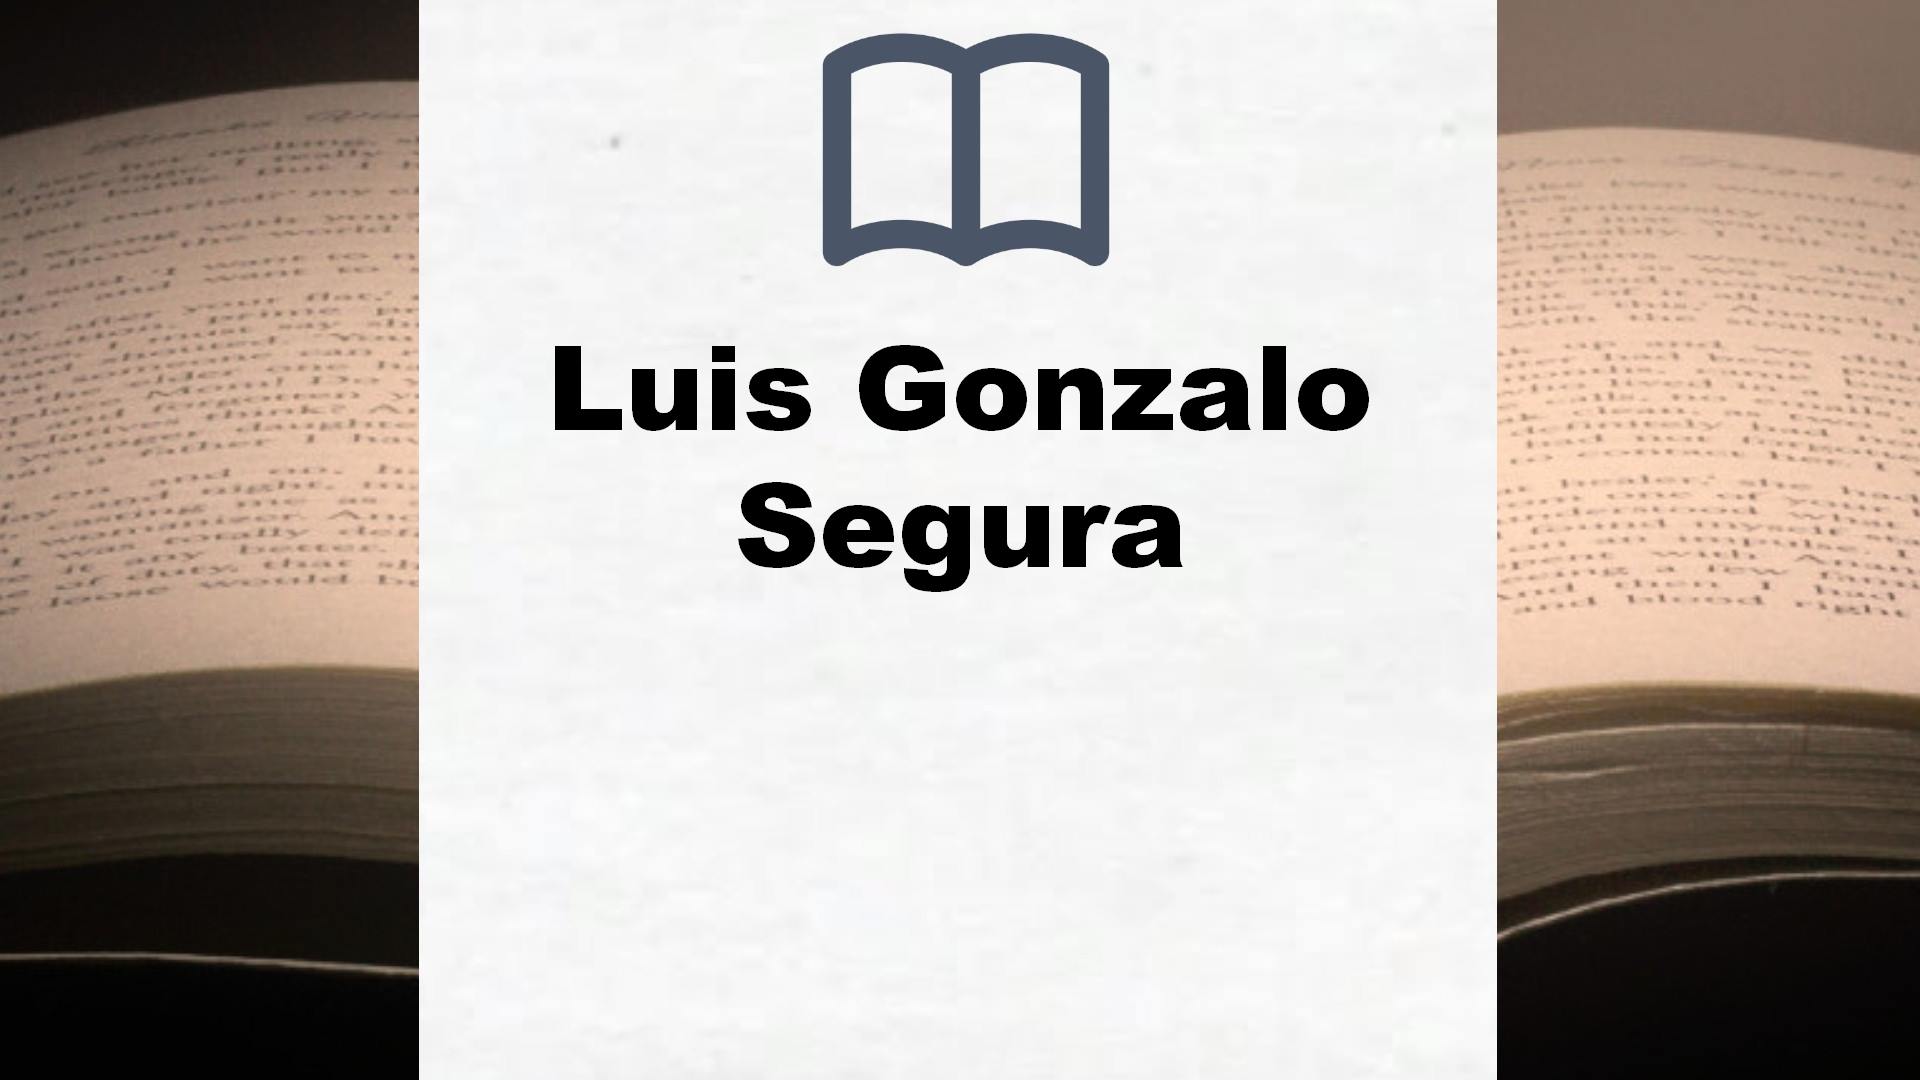 Libros Luis Gonzalo Segura